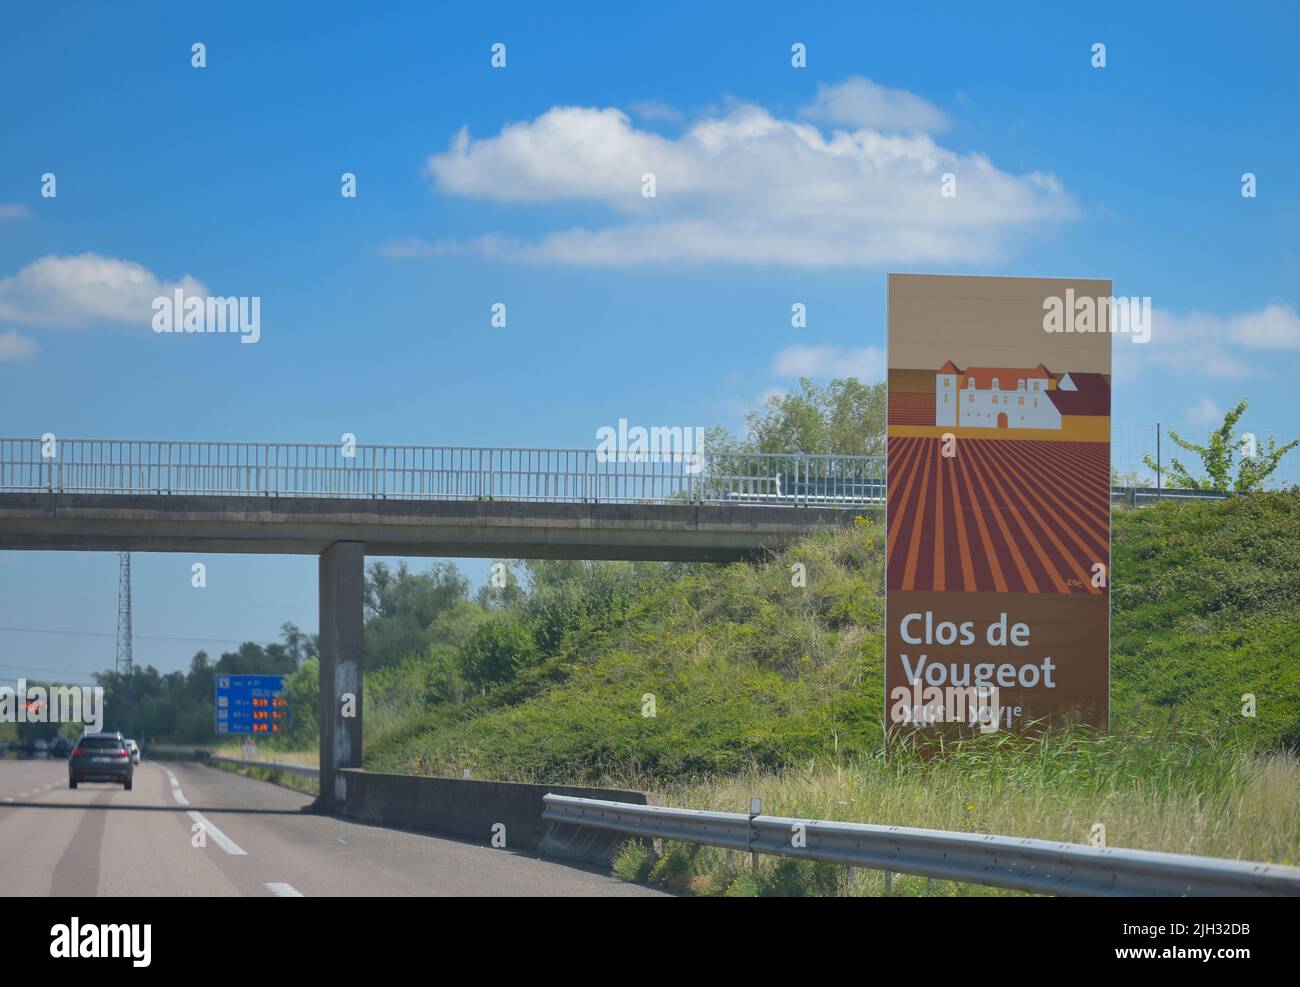 Beschilderung der weltberühmten Climats de Bourgogne entlang der Autobahn A13, in der Nähe von Dijon FR Stockfoto